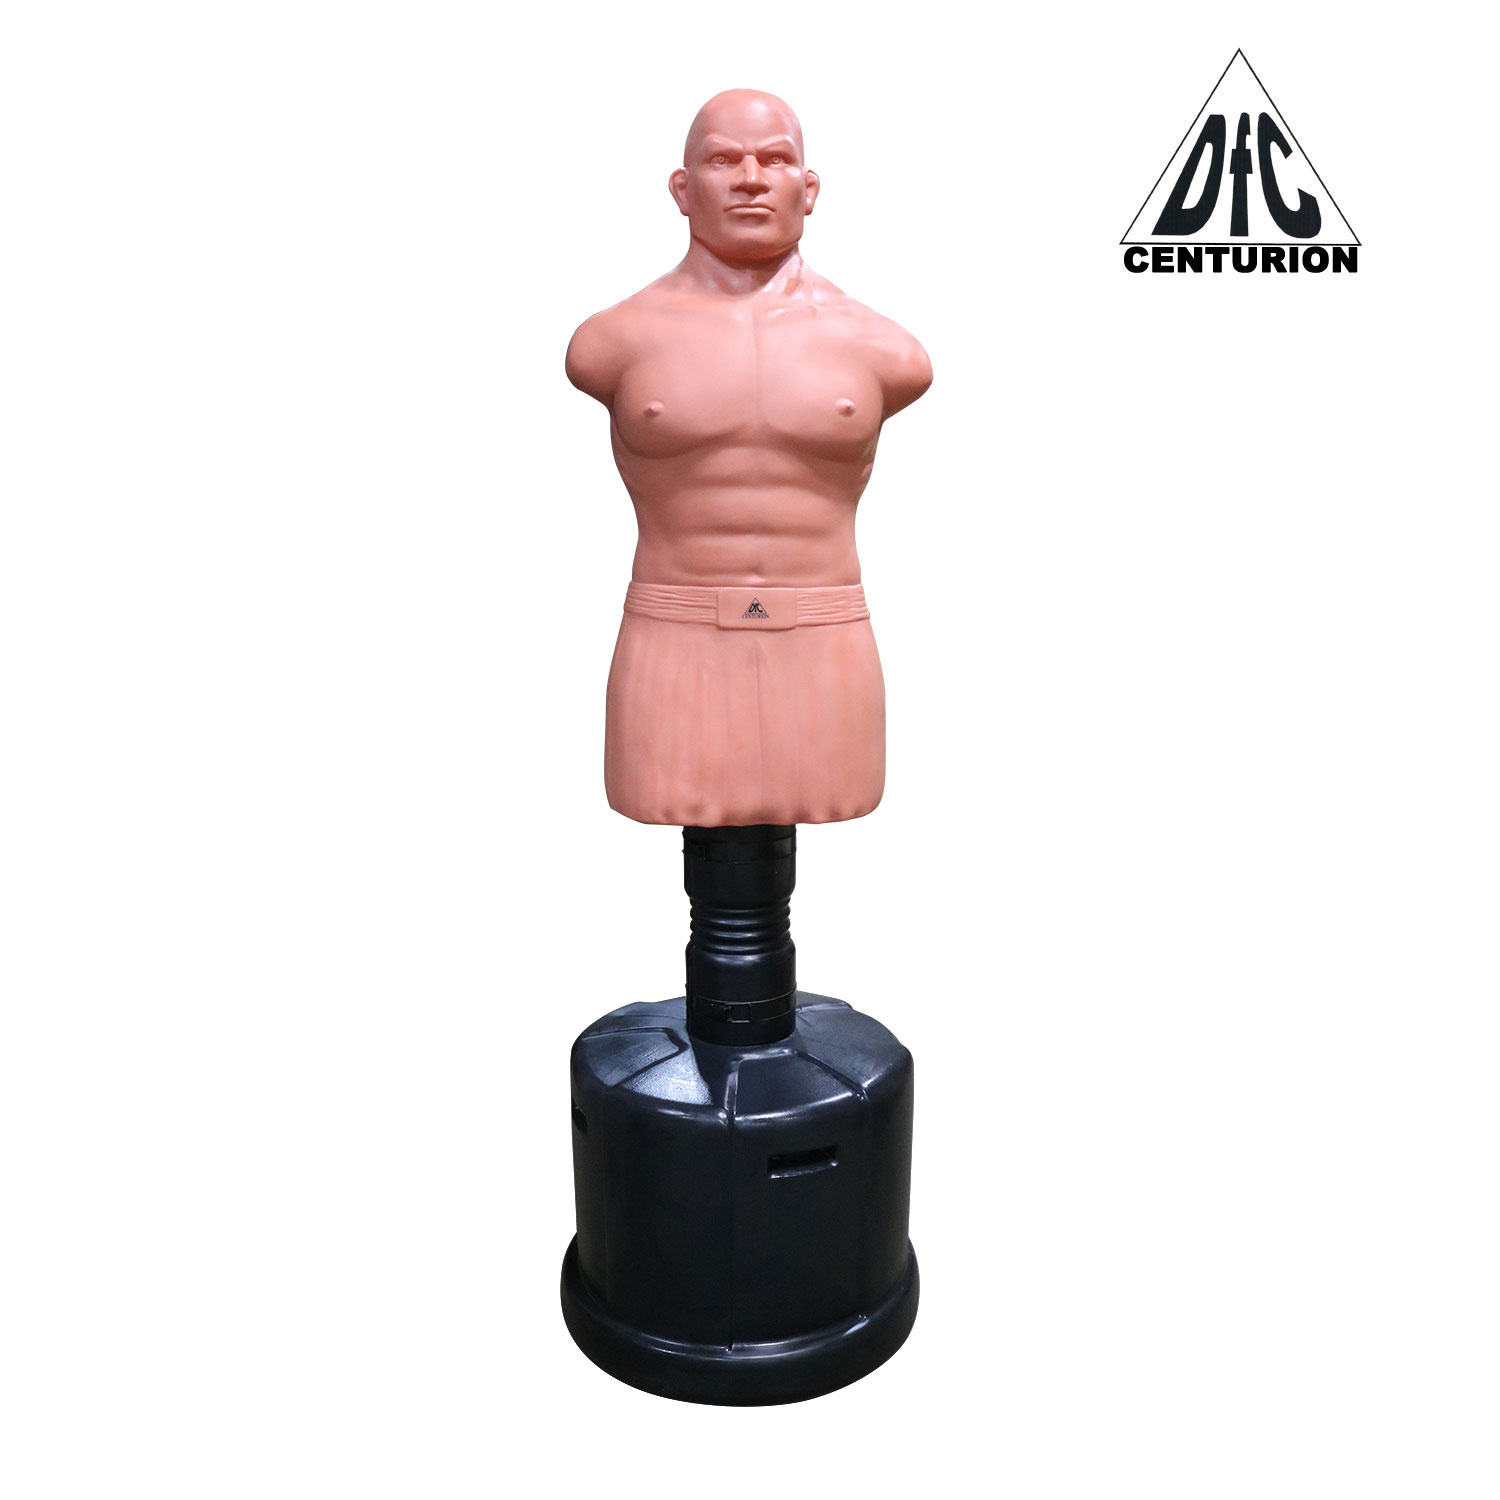 DFC Centurion Boxing Punching Man-Heavy водоналивной - бежевый из каталога манекенов для бокса в Казани по цене 43990 ₽